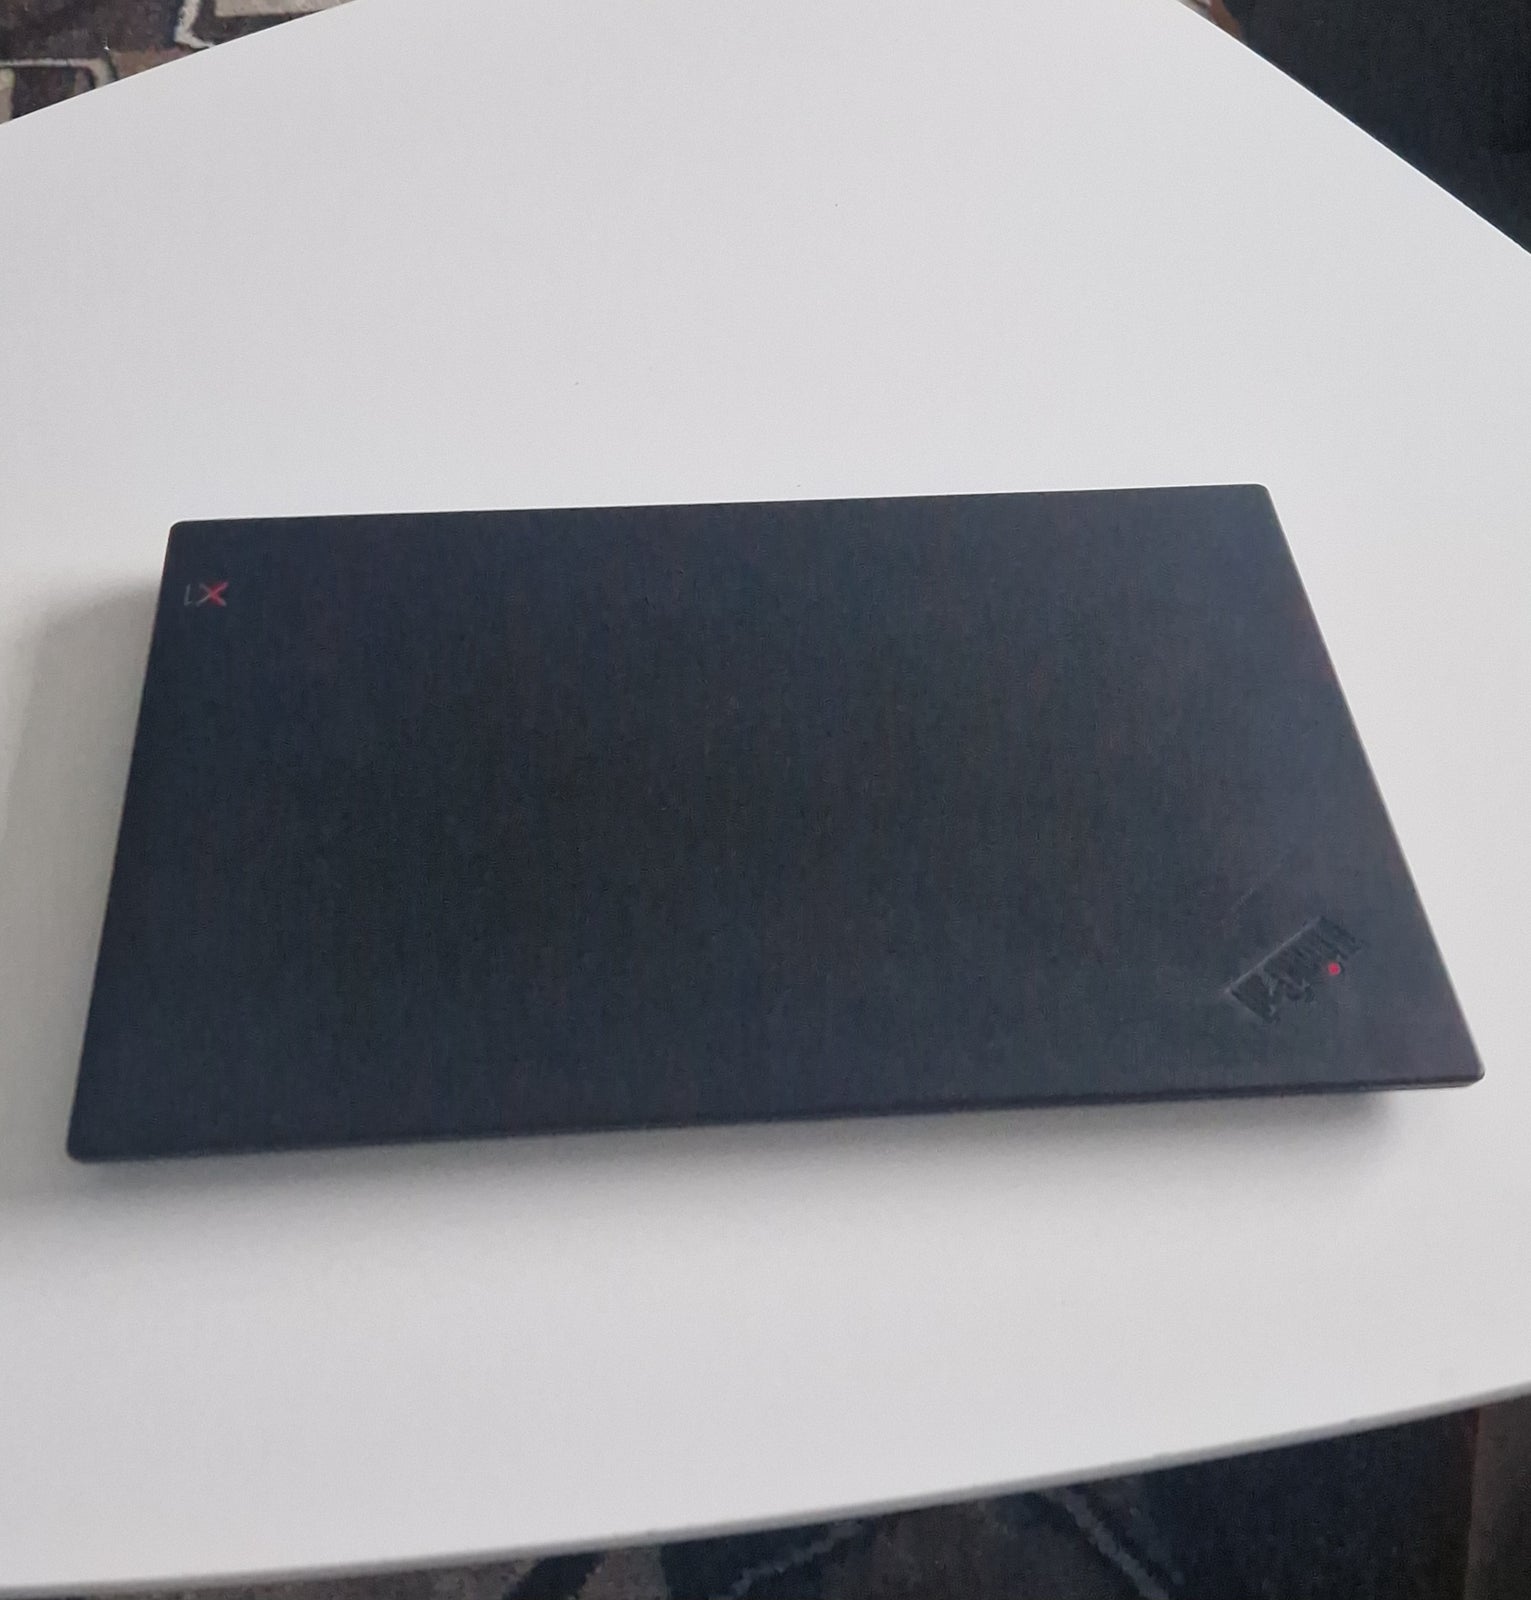 Lenovo Thinkpad x1 carbon gen 6, 3.40 GHz, 8 GB ram